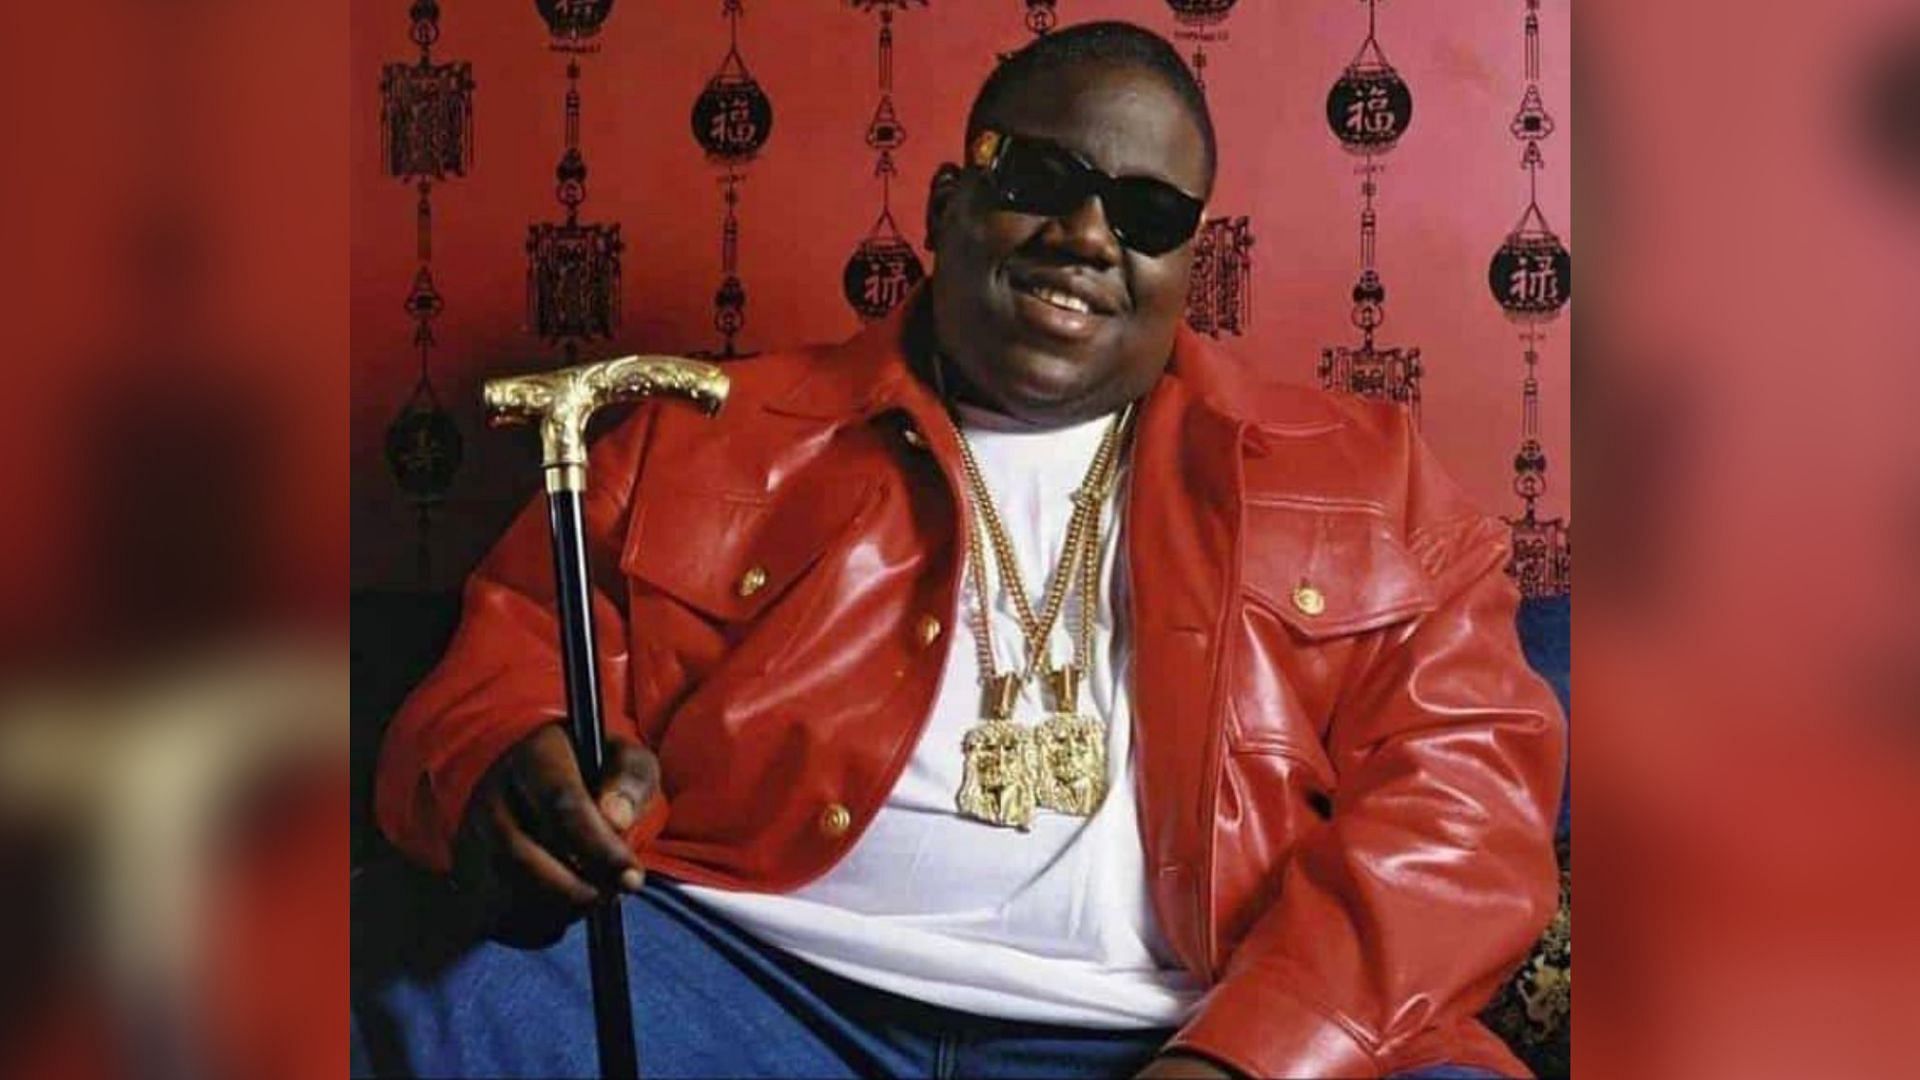 The Notorious B.I.G. (Image via @DAMIADENUGA/Twitter)